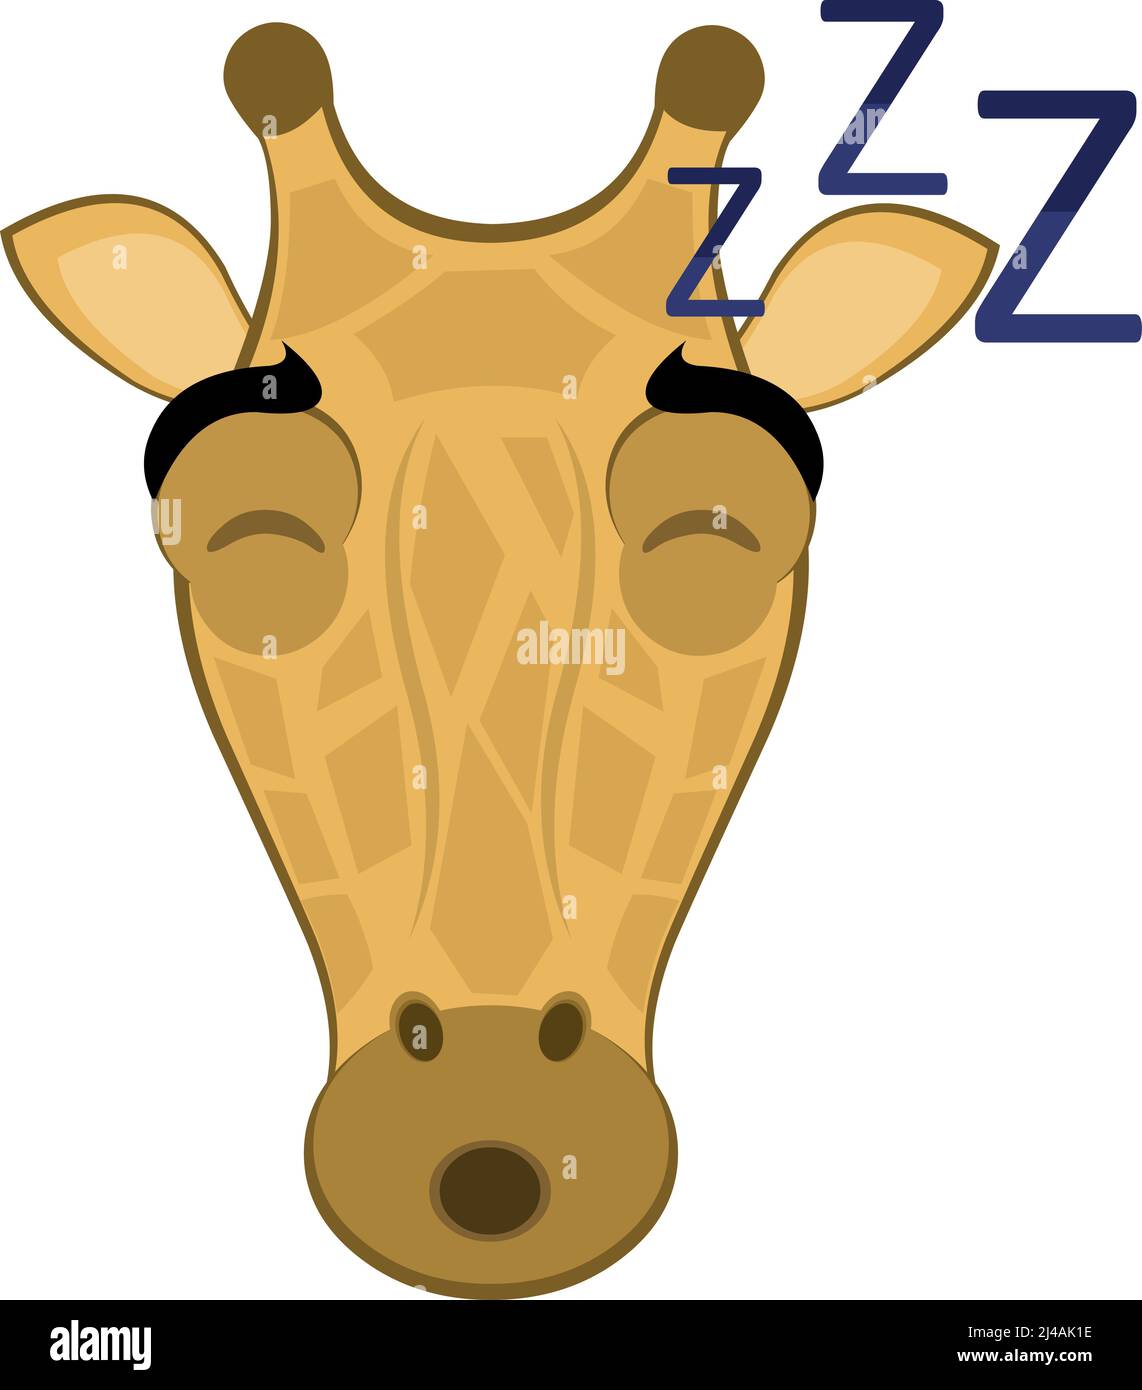 Vector illustration of the face of a cartoon giraffe sleeping Stock Vector